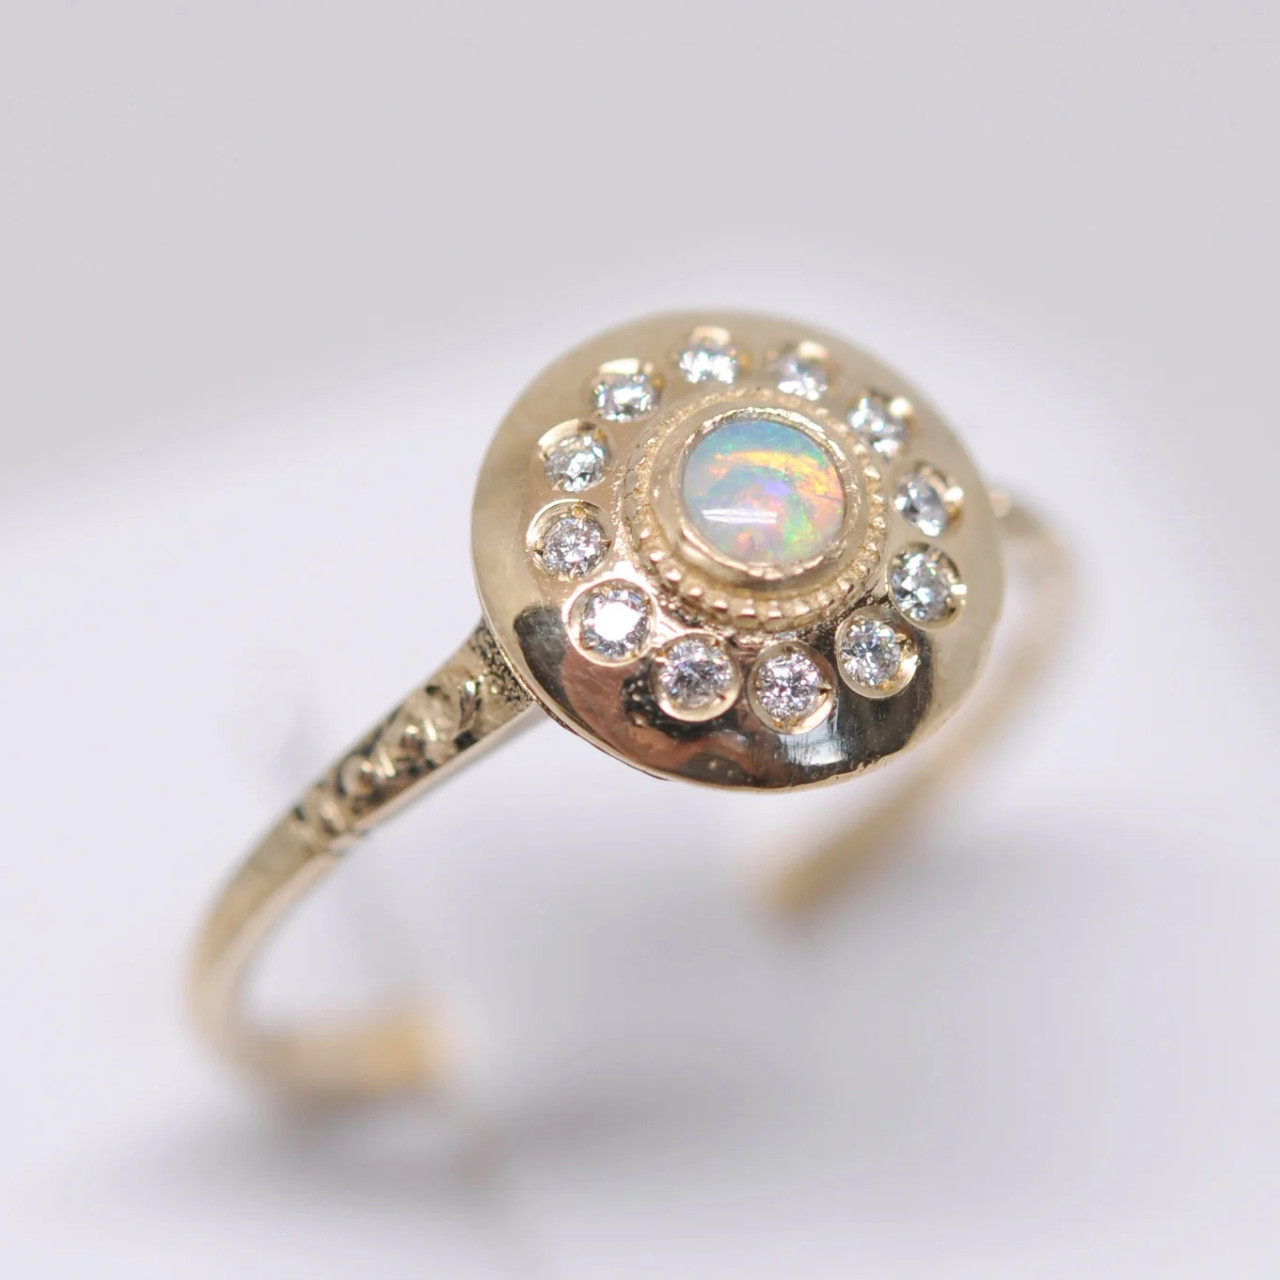 Royal Dynasty Lunari UFO Ring, Sofia Zakia, tomfoolery